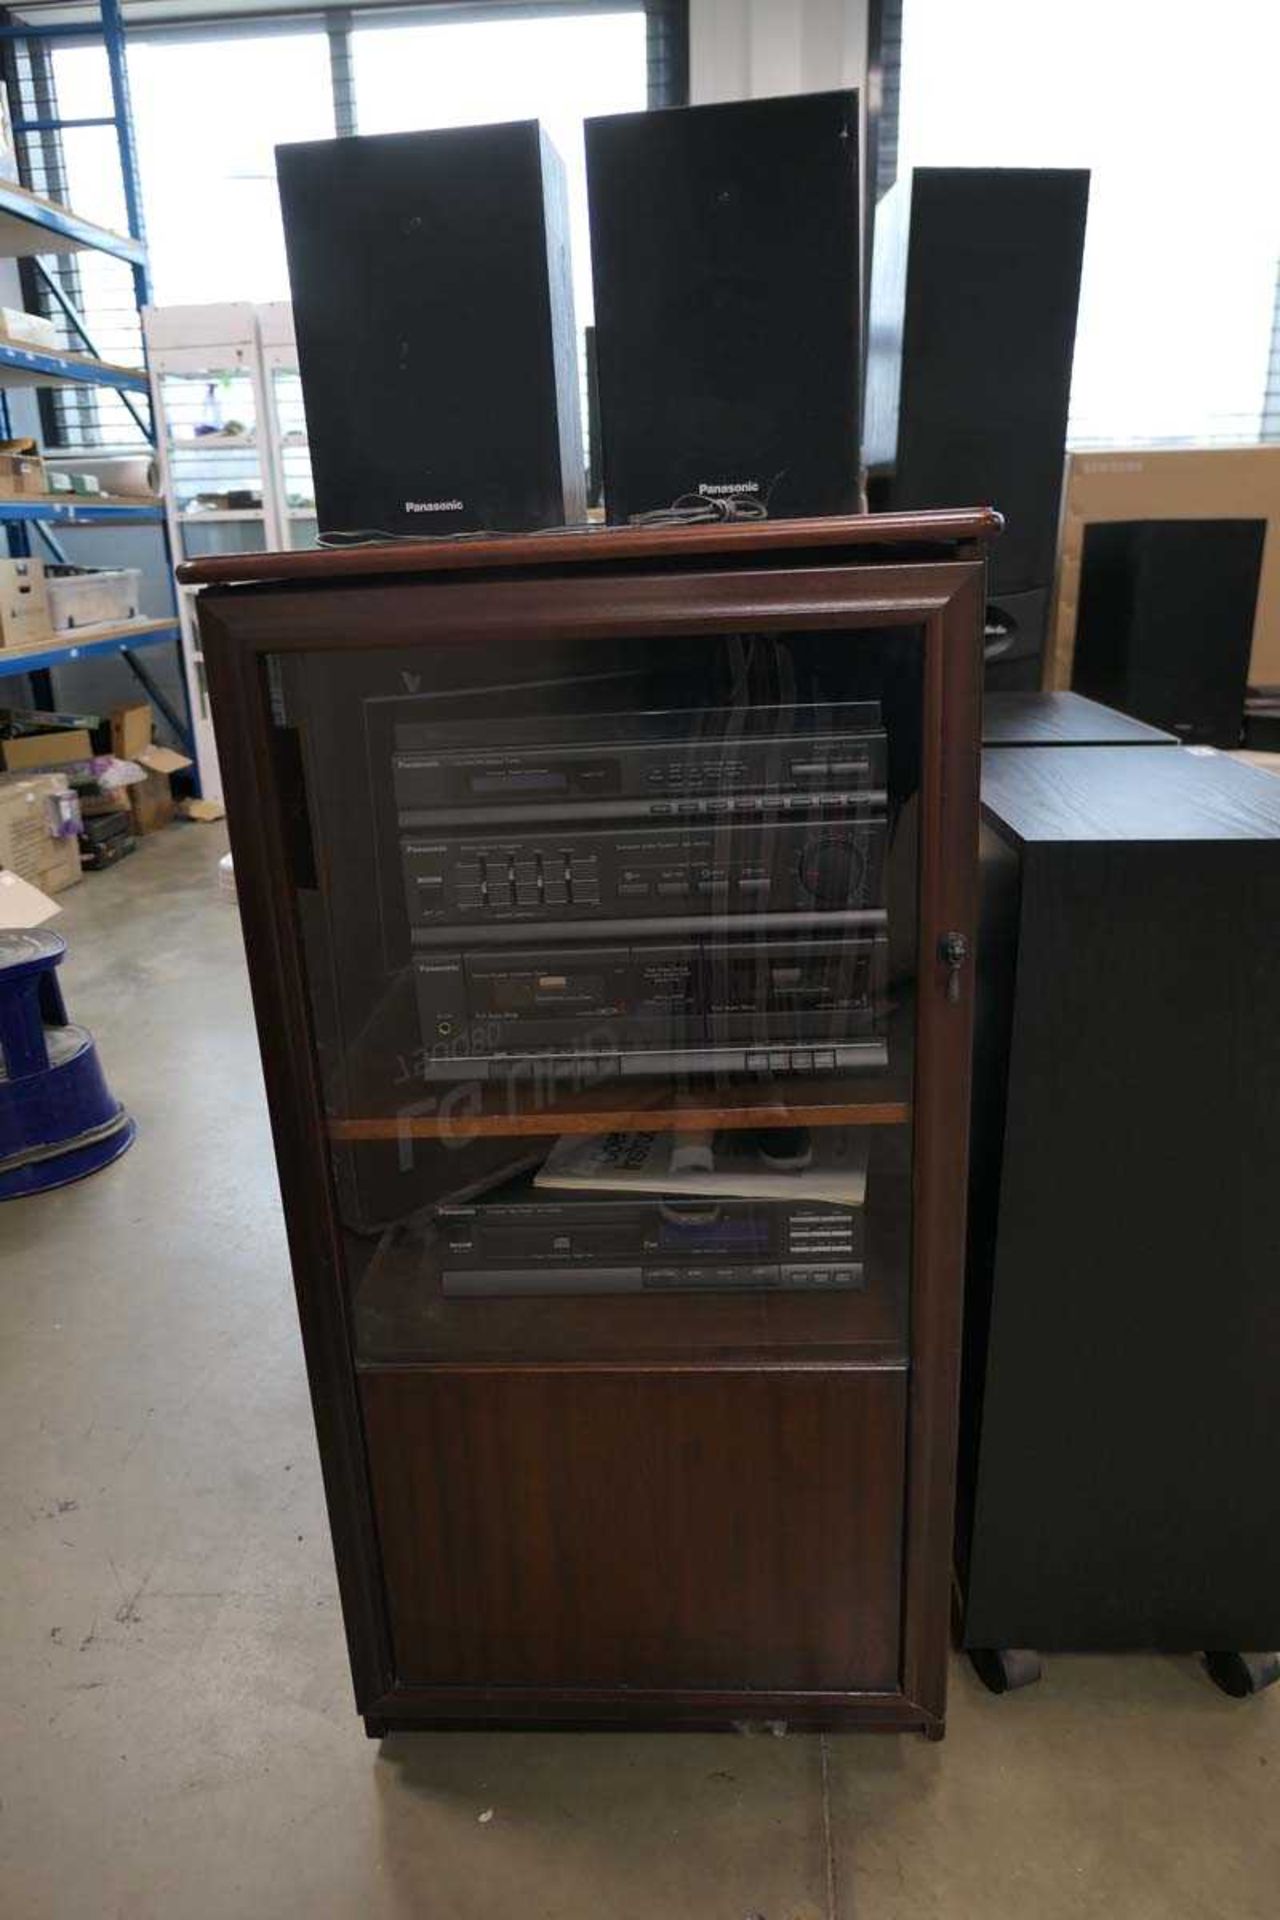 Mahogany hifi cabinet containing Panasonic hifi with speakers and albums